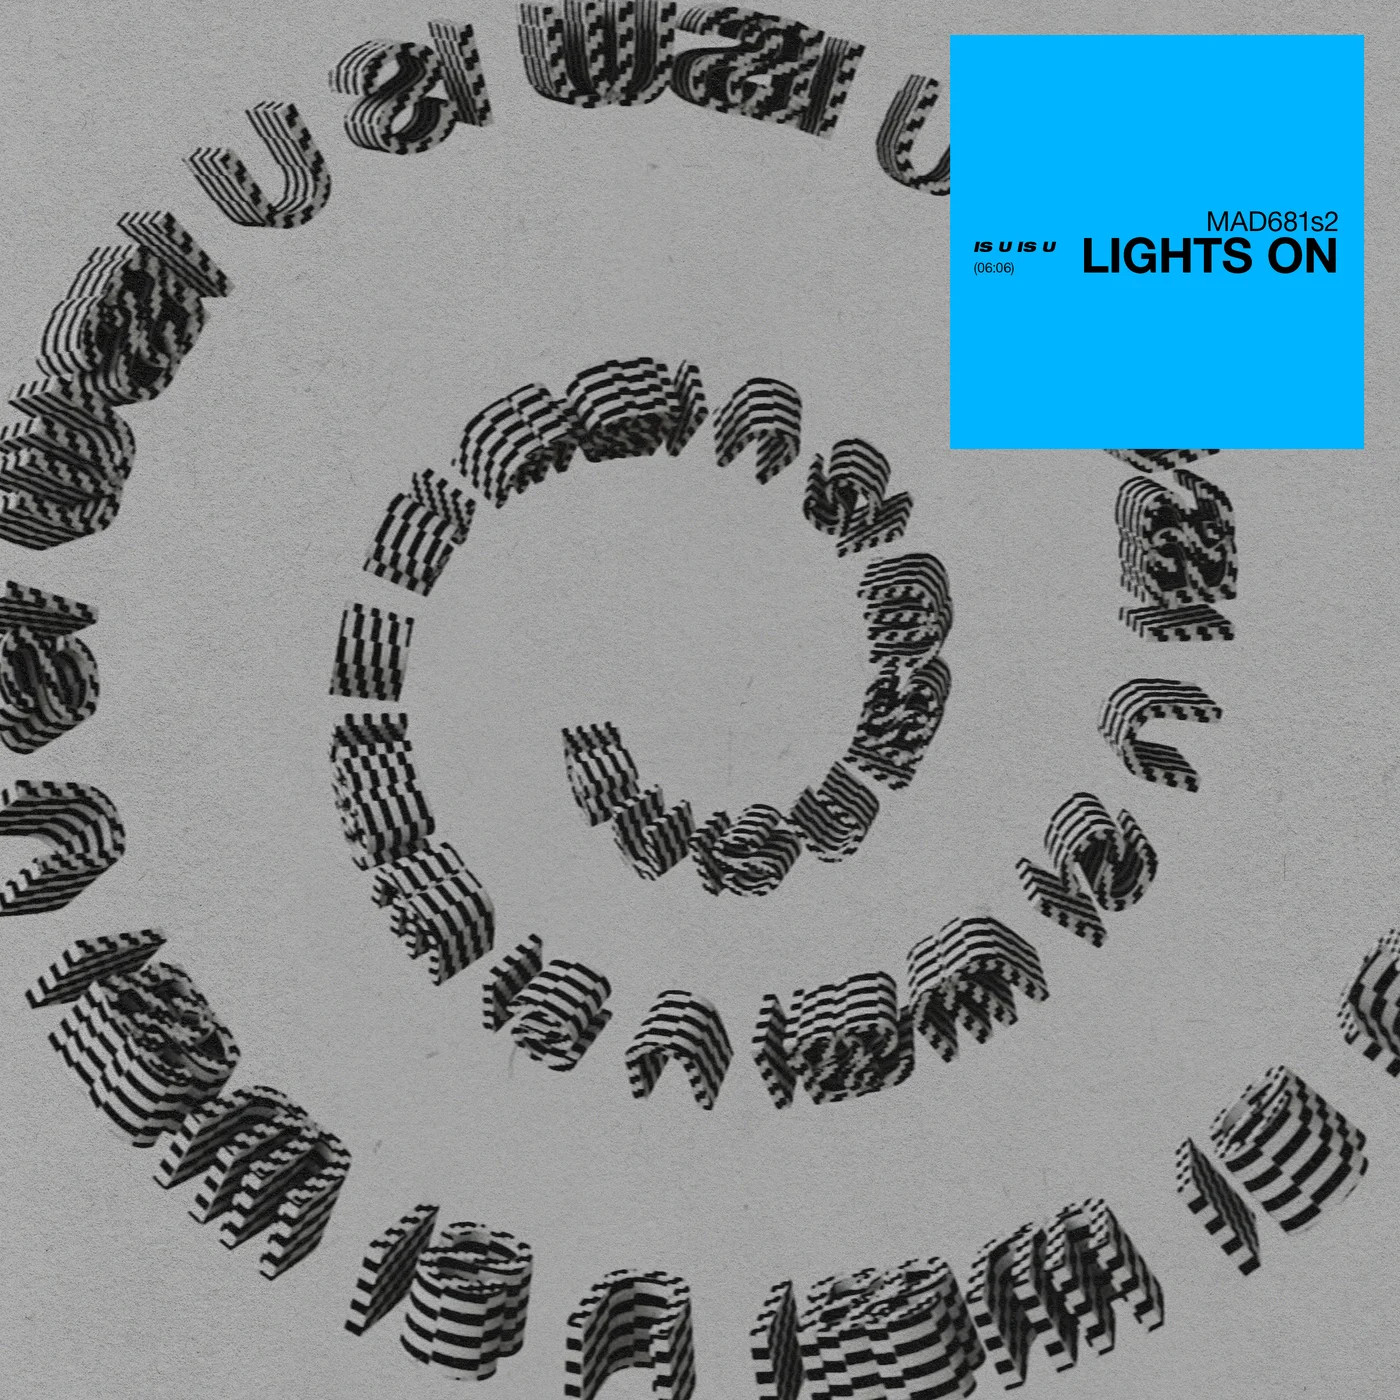 Kito, Chrome Sparks, & IS U IS U — Lights On cover artwork